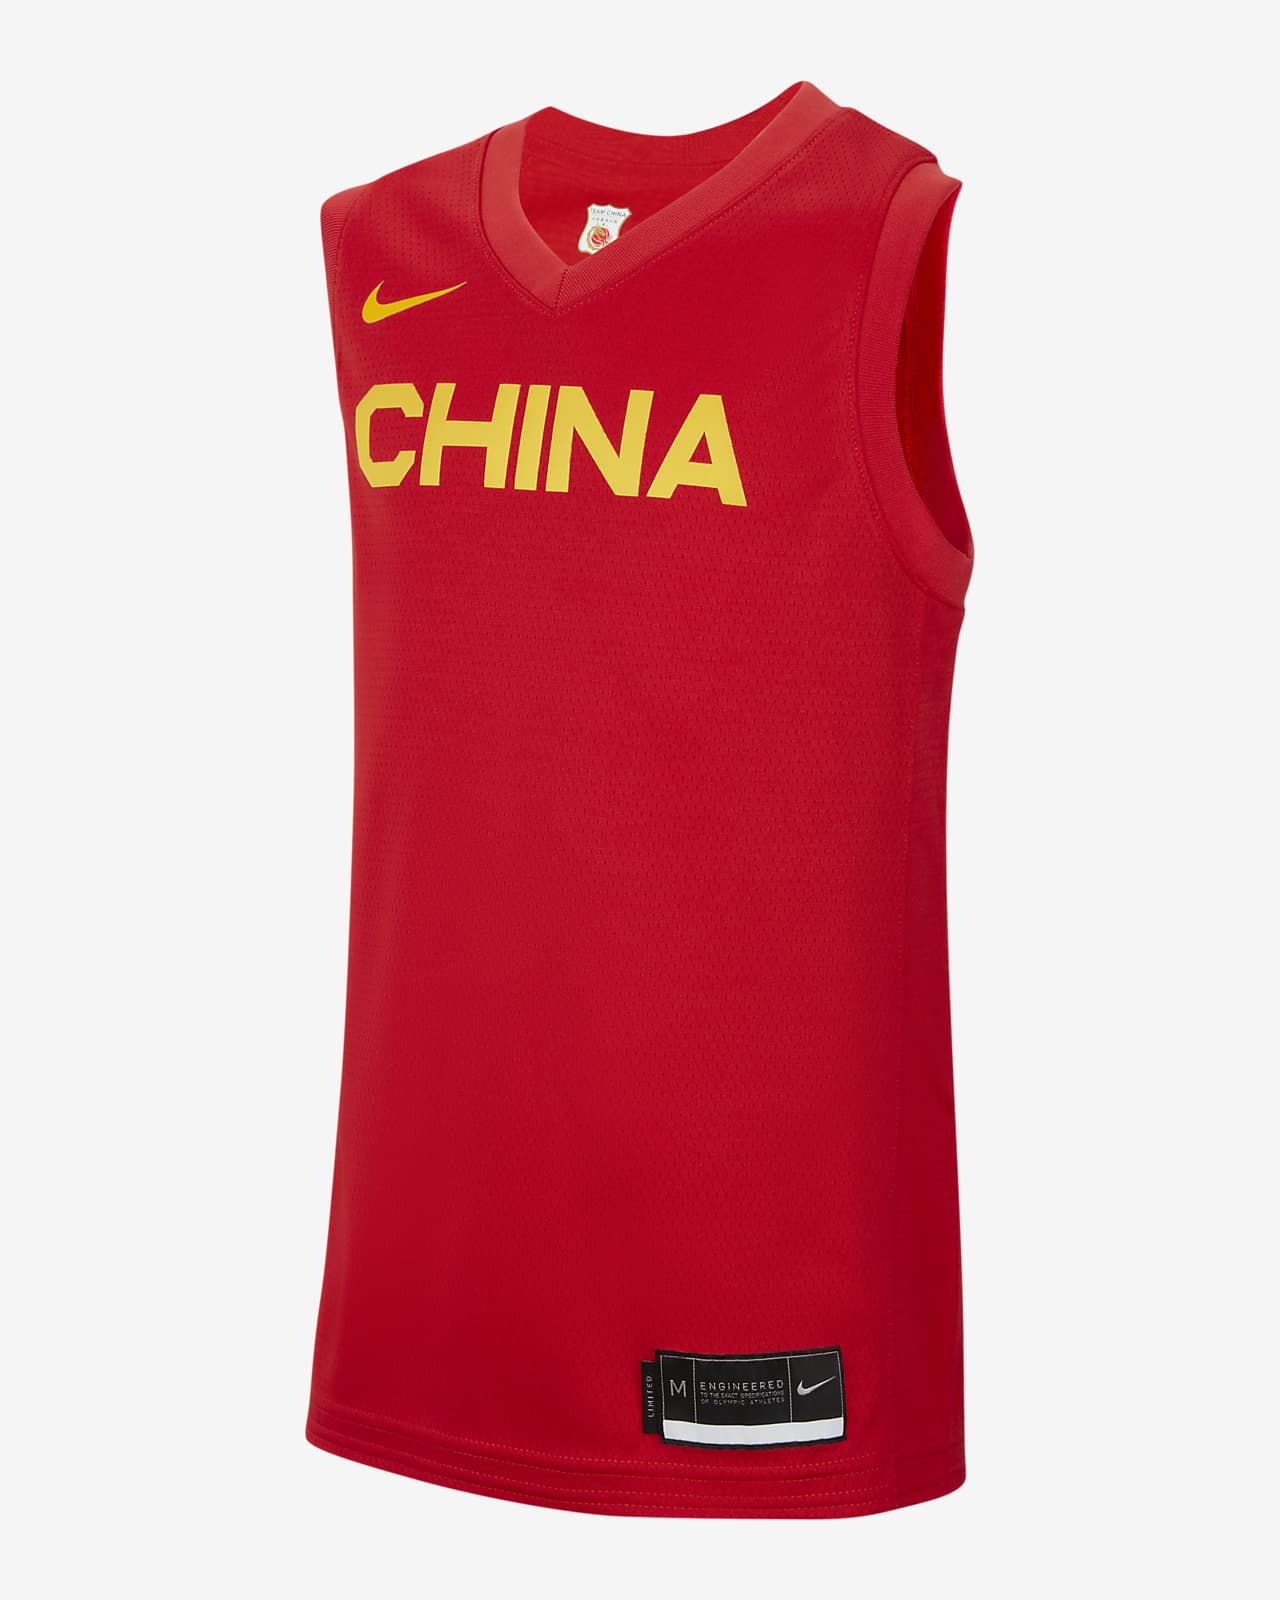 China (Road) Nike Basketballtrikot für ältere Kinder